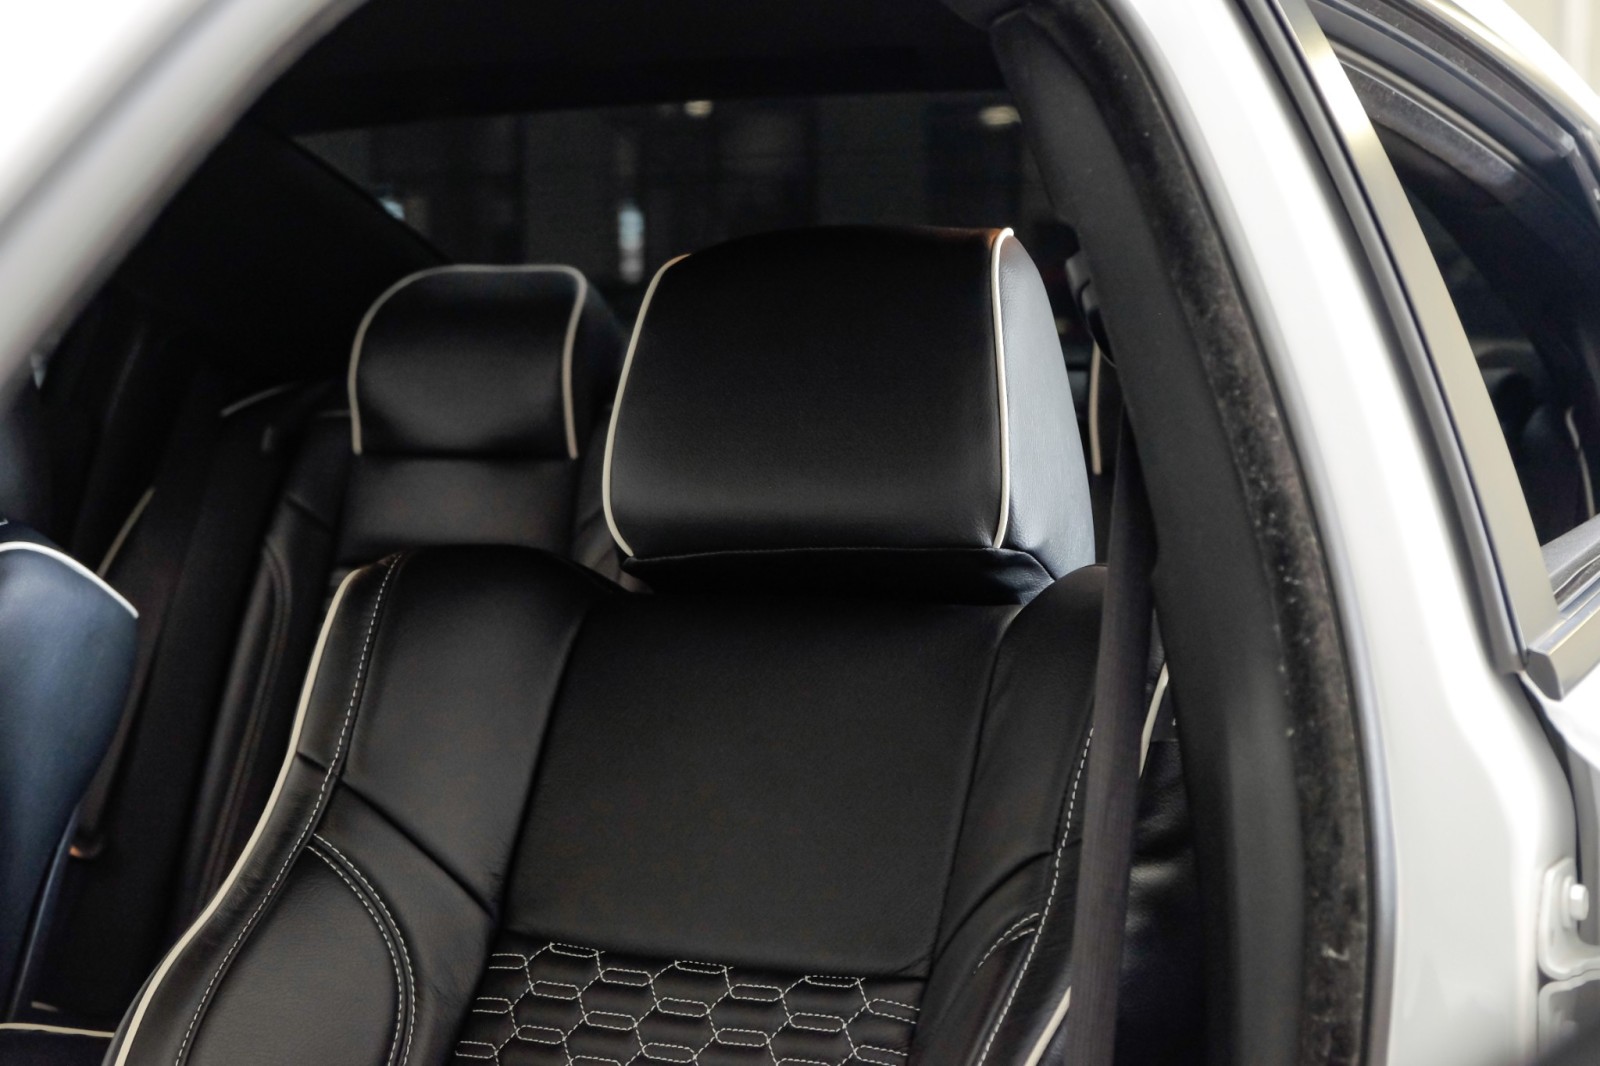 2020 Dodge Charger GT CustomLeather BlackTopPkg RESERVECUSTOM CstmSus 30